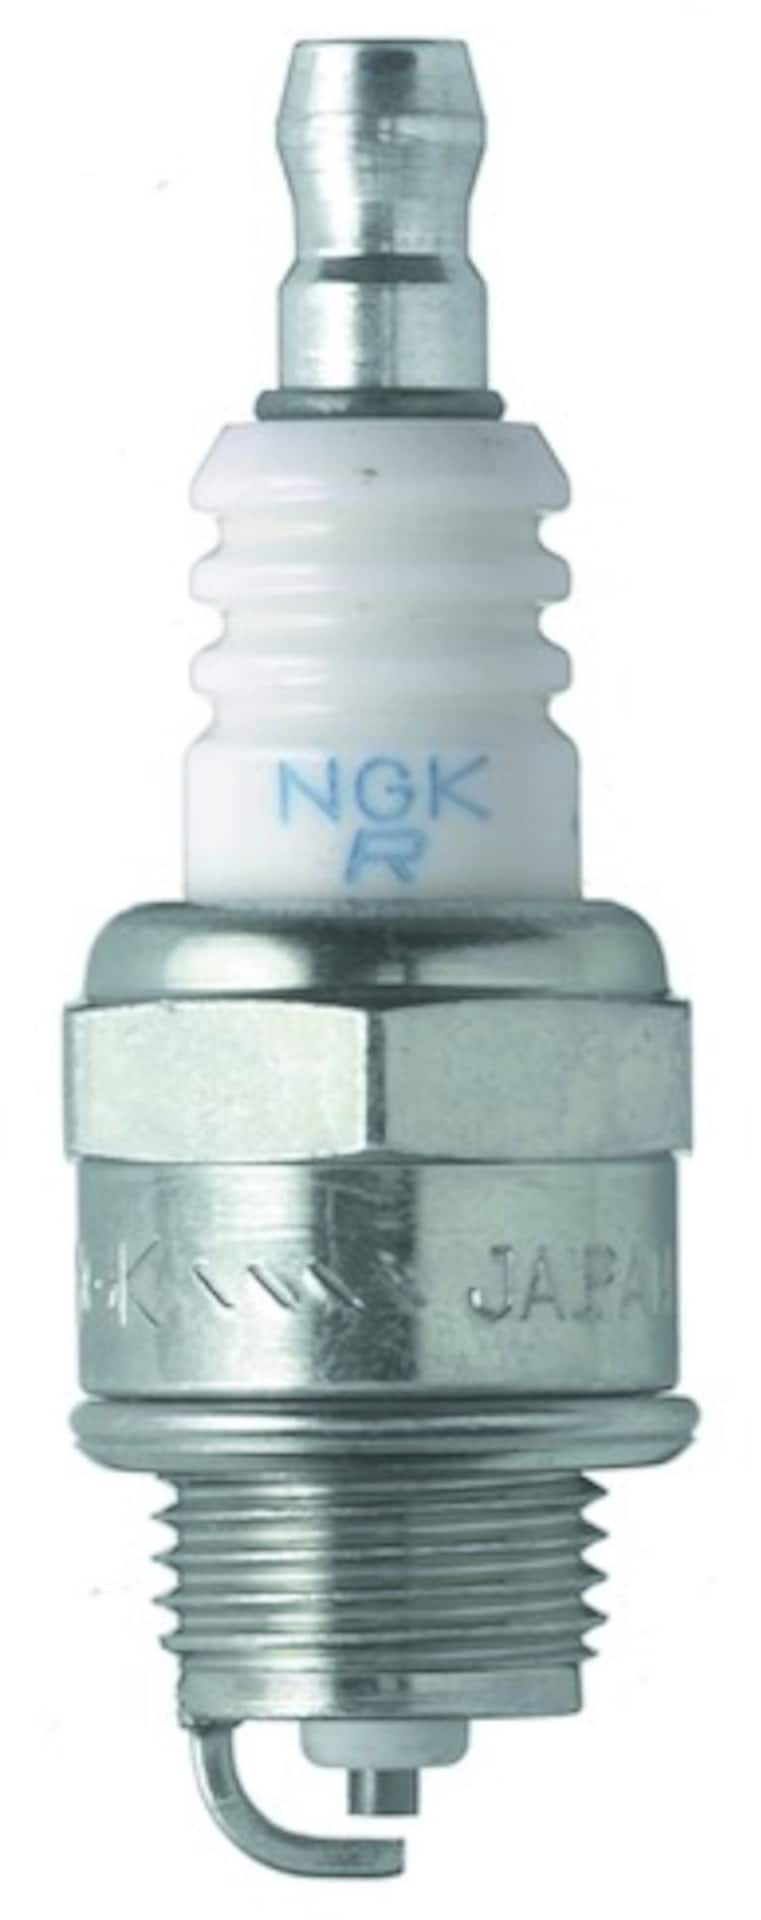  NGK - Bougie ALLUMAGE Boite Nickel - BPMR7A